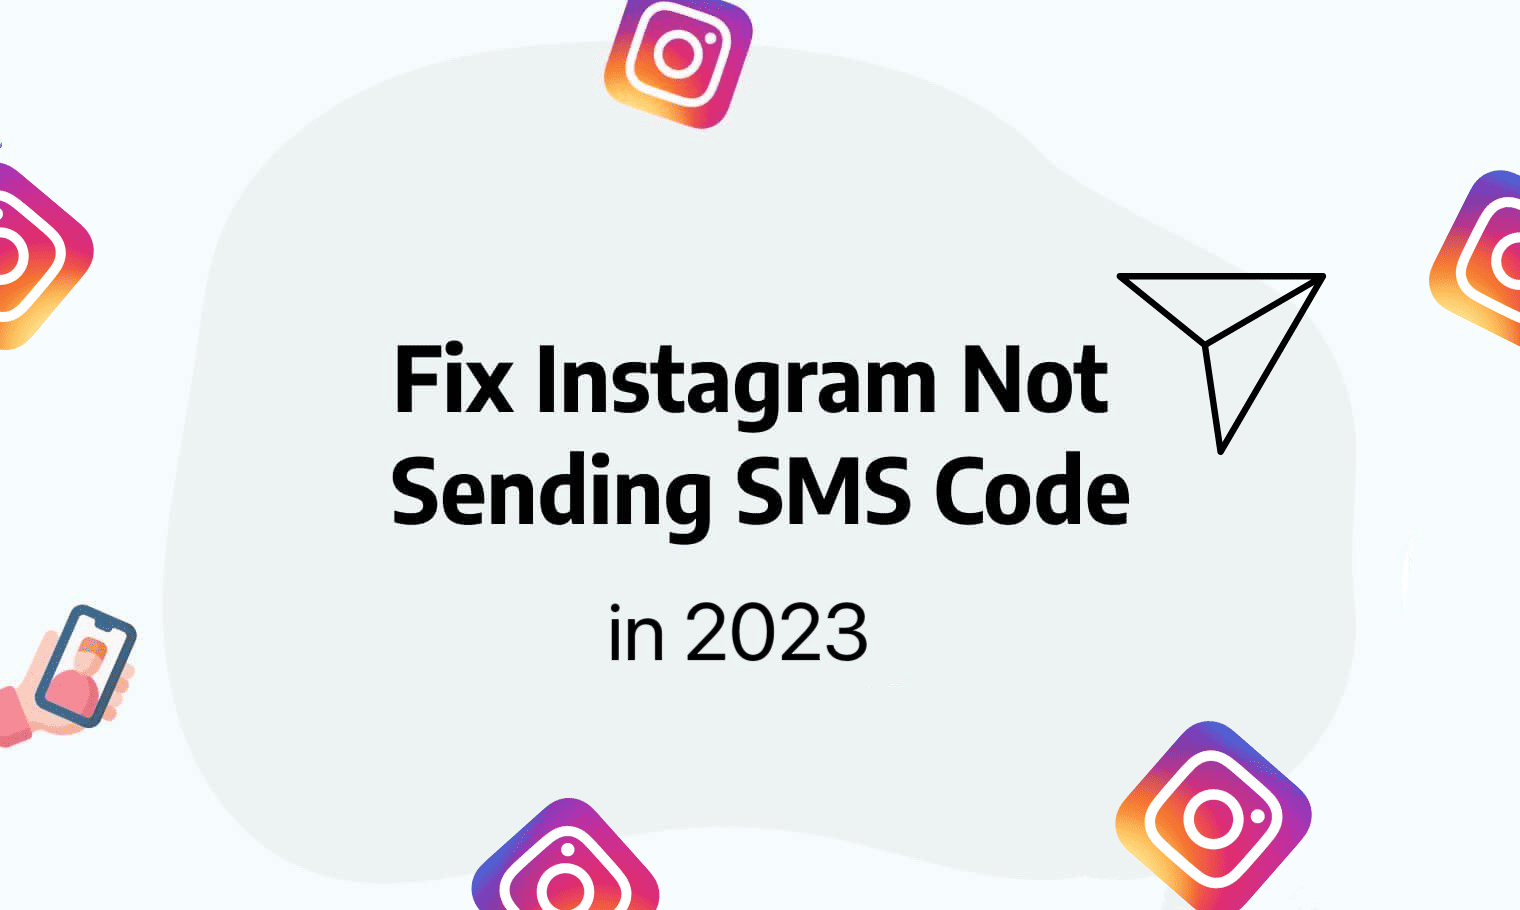 How to Fix Instagram Not Sending SMS Code in 2023